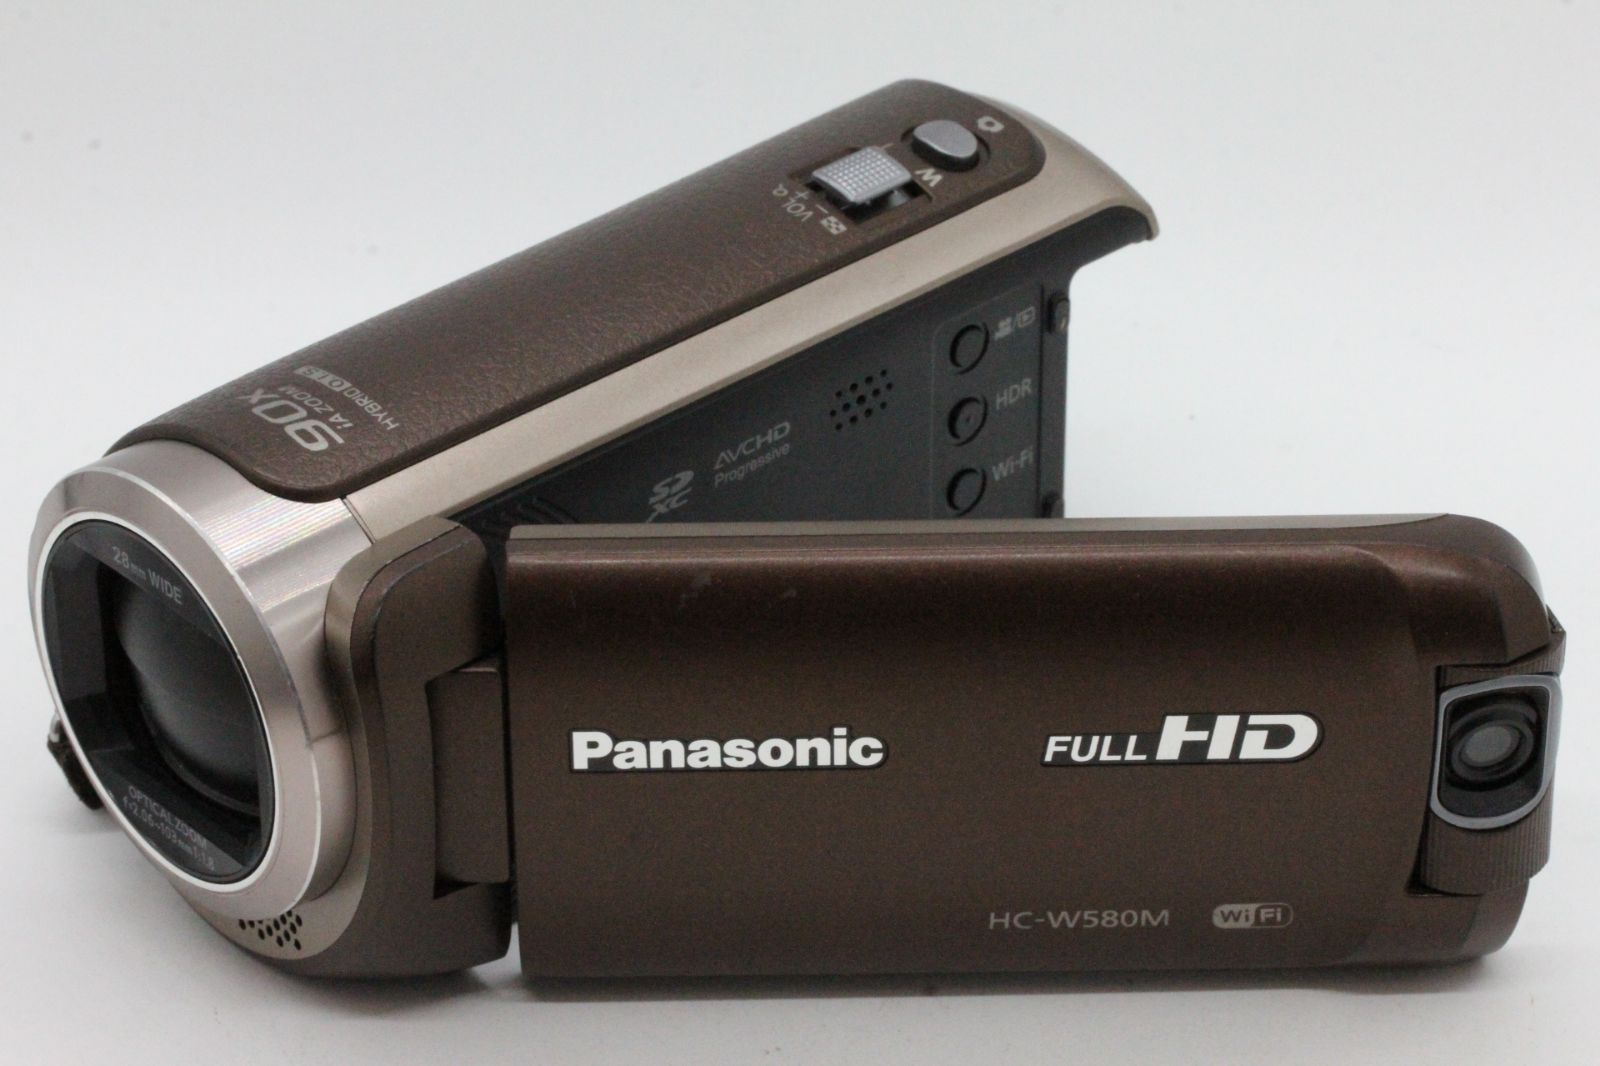 Panasonic HDビデオカメラ WM GB サブカメラ搭載 高倍率倍